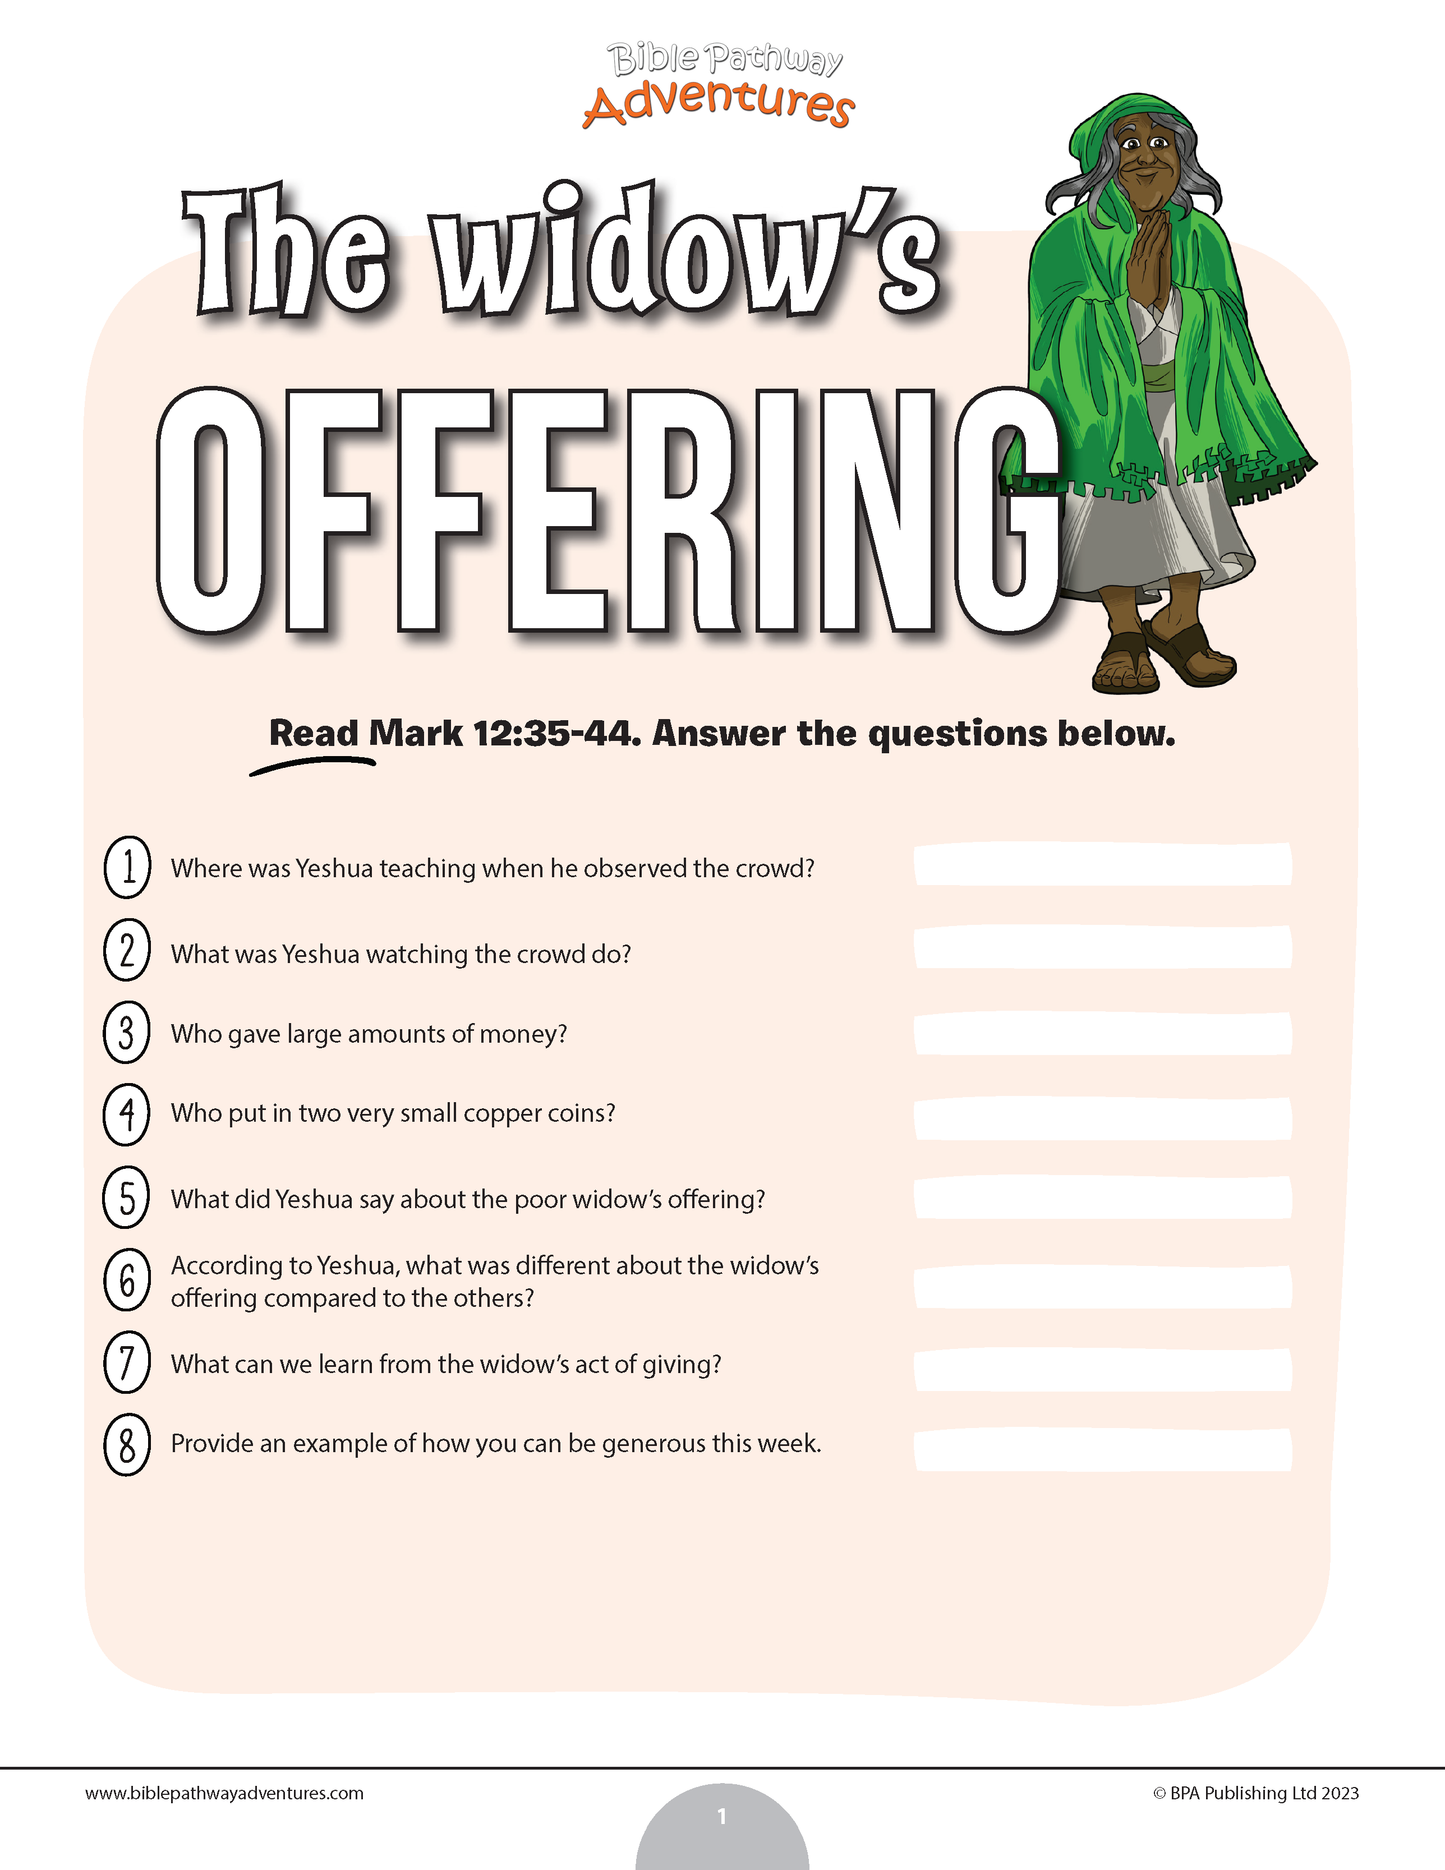 The widow's offering quiz (PDF)